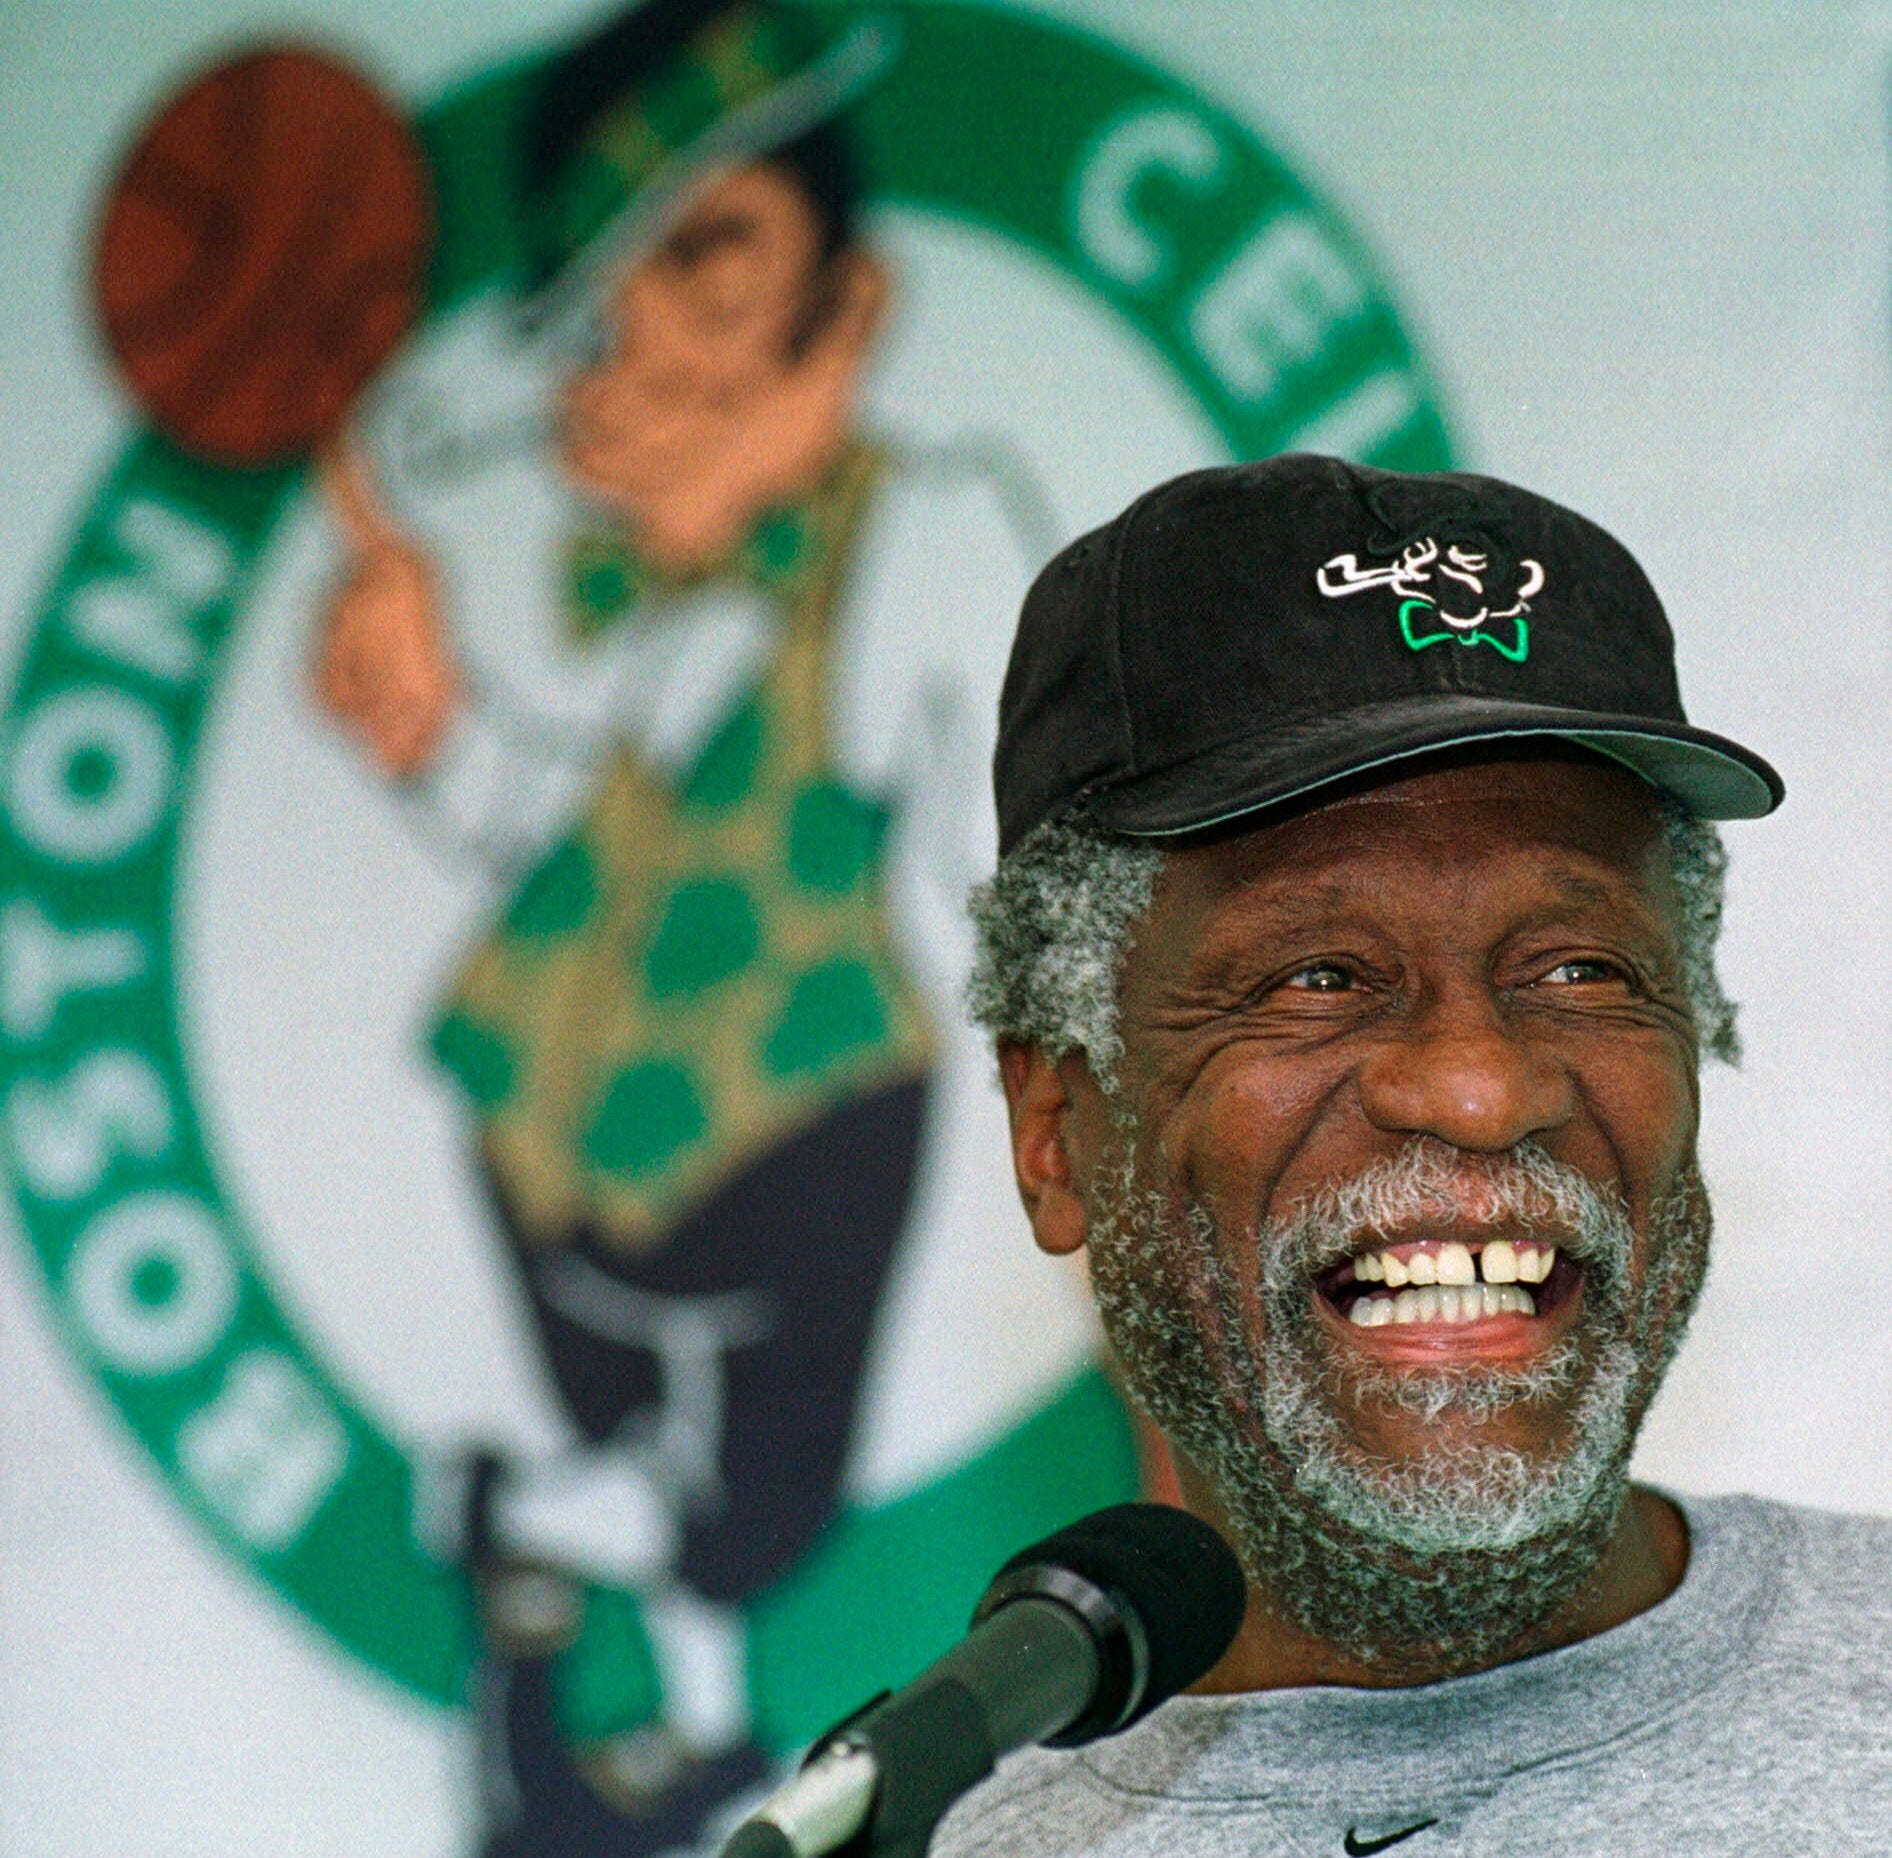 Bill Russell, NBA legend and Boston Celtics great, dies at 88